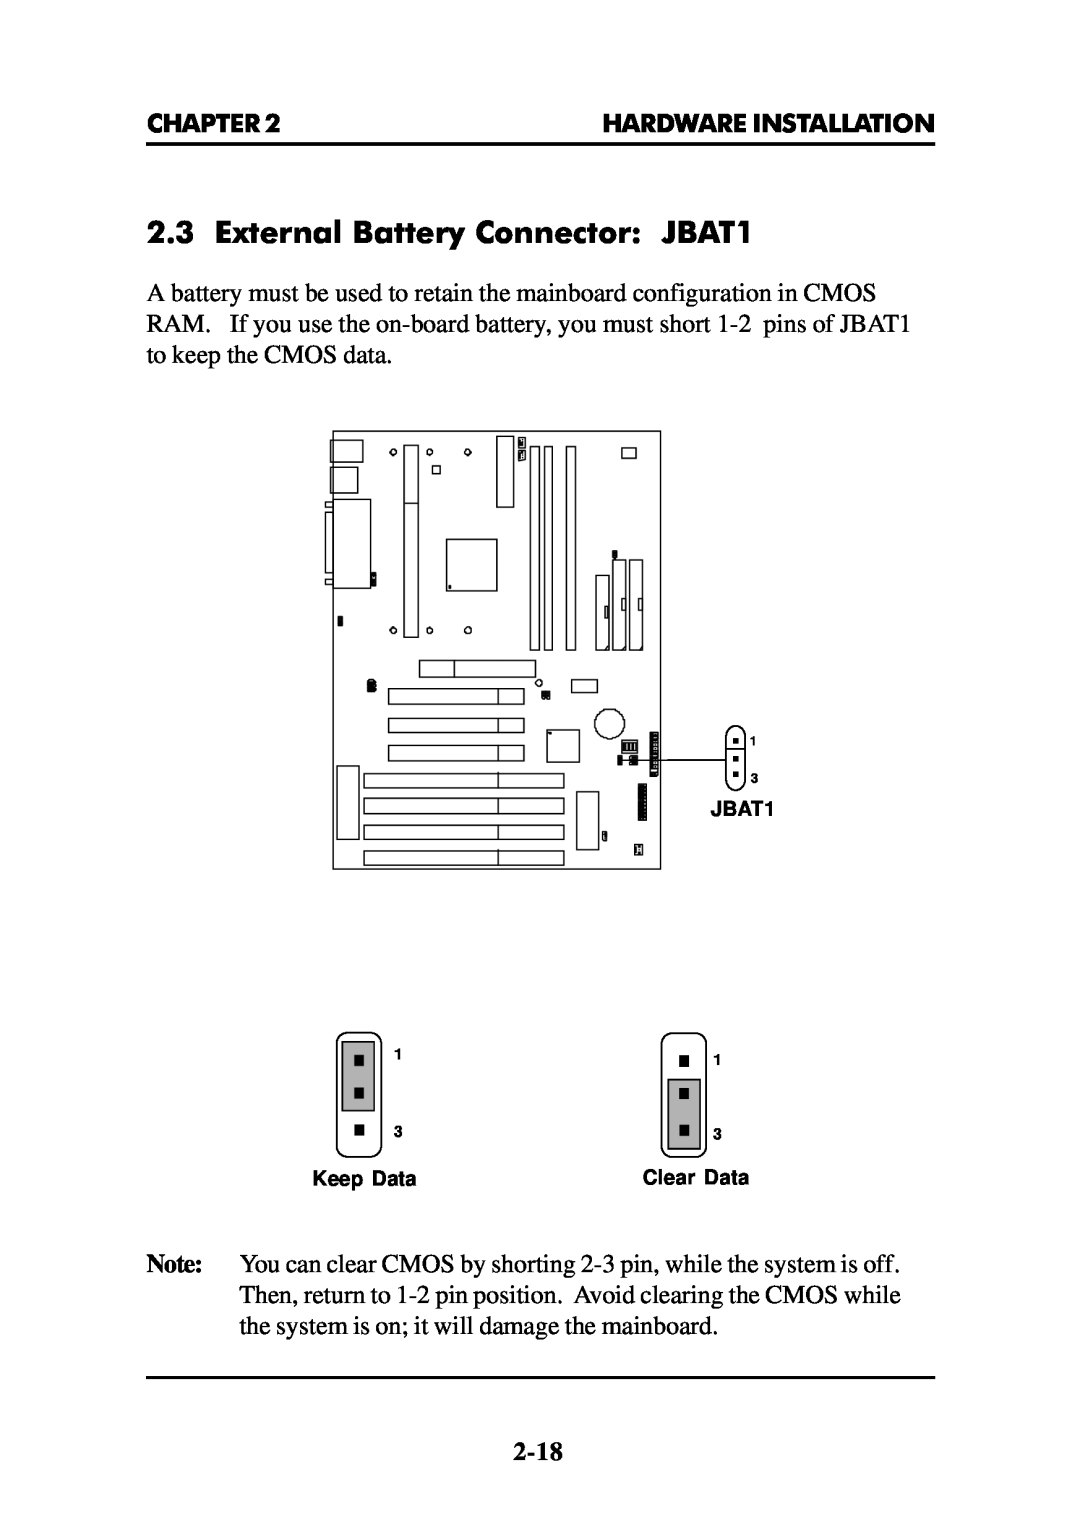 Intel MS-6112 manual External Battery Connector JBAT1 